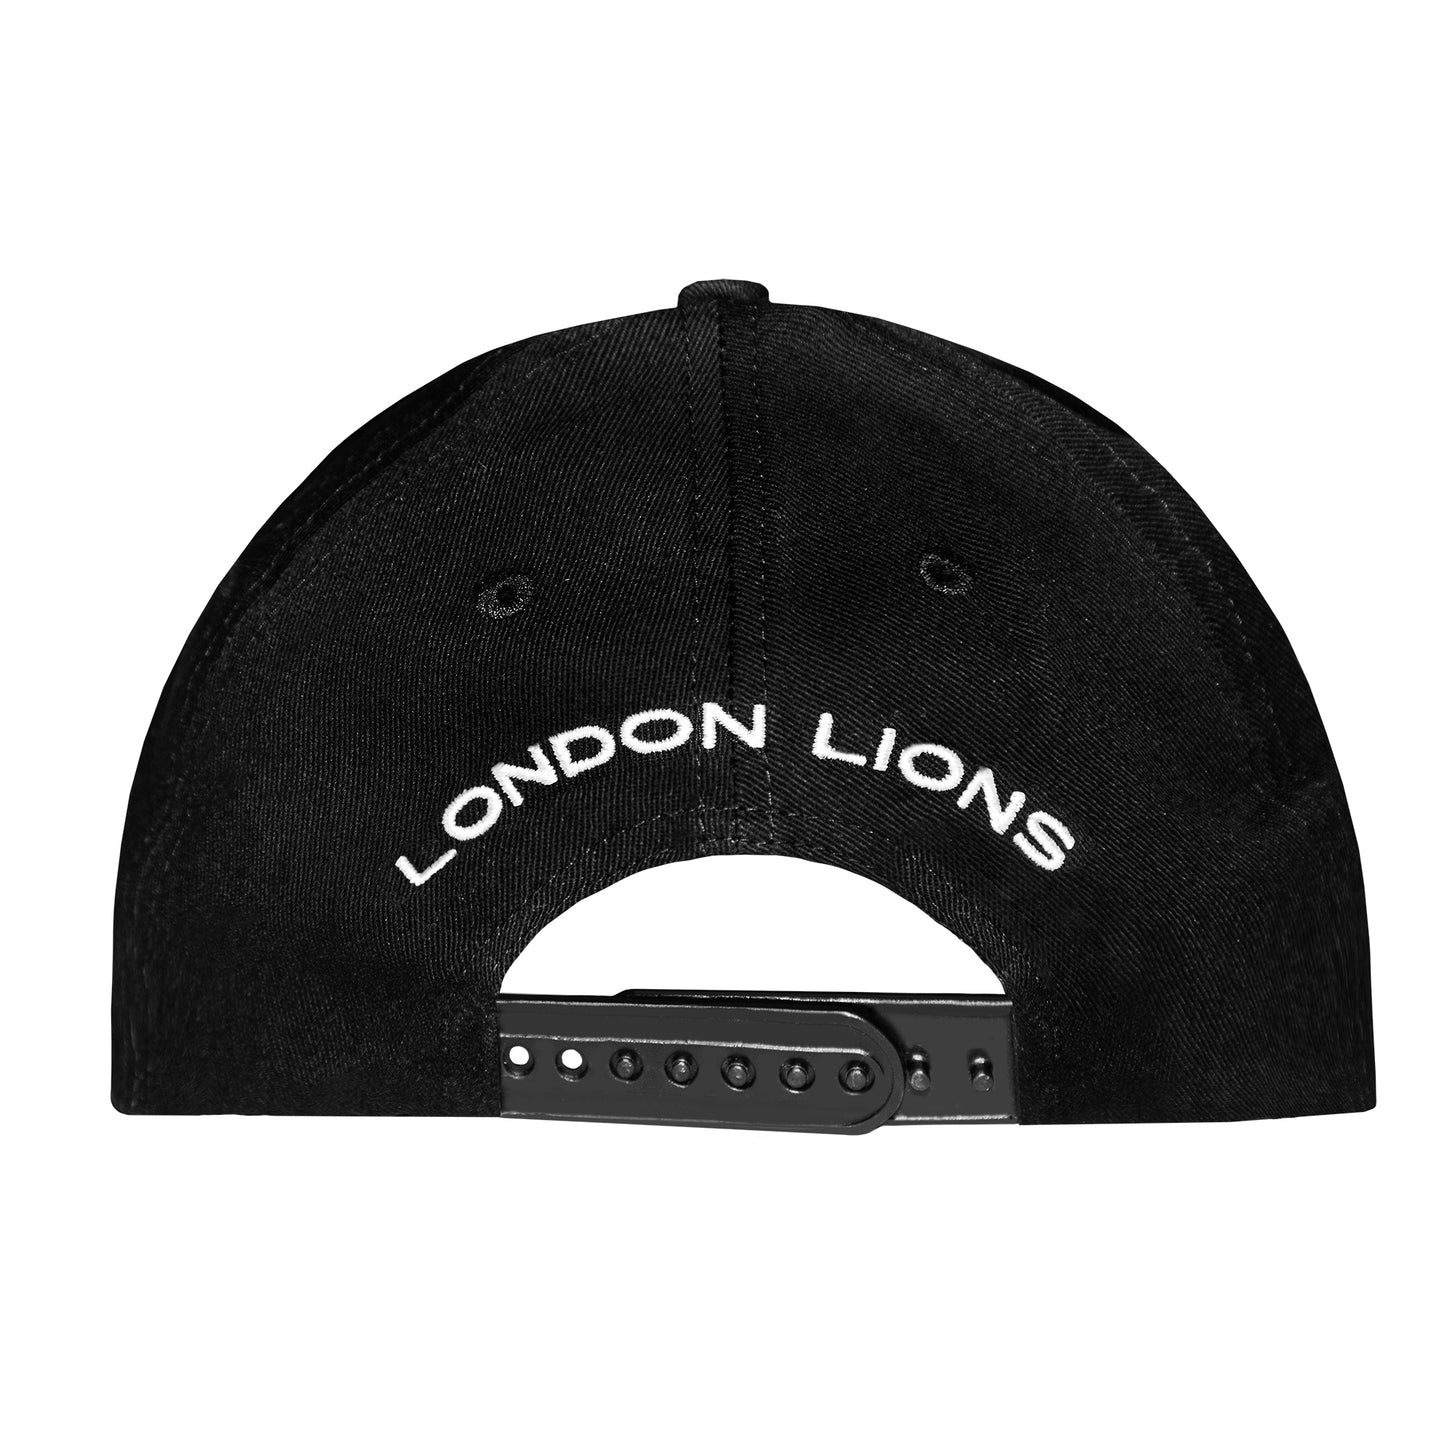 LDN London Lions Cap - White